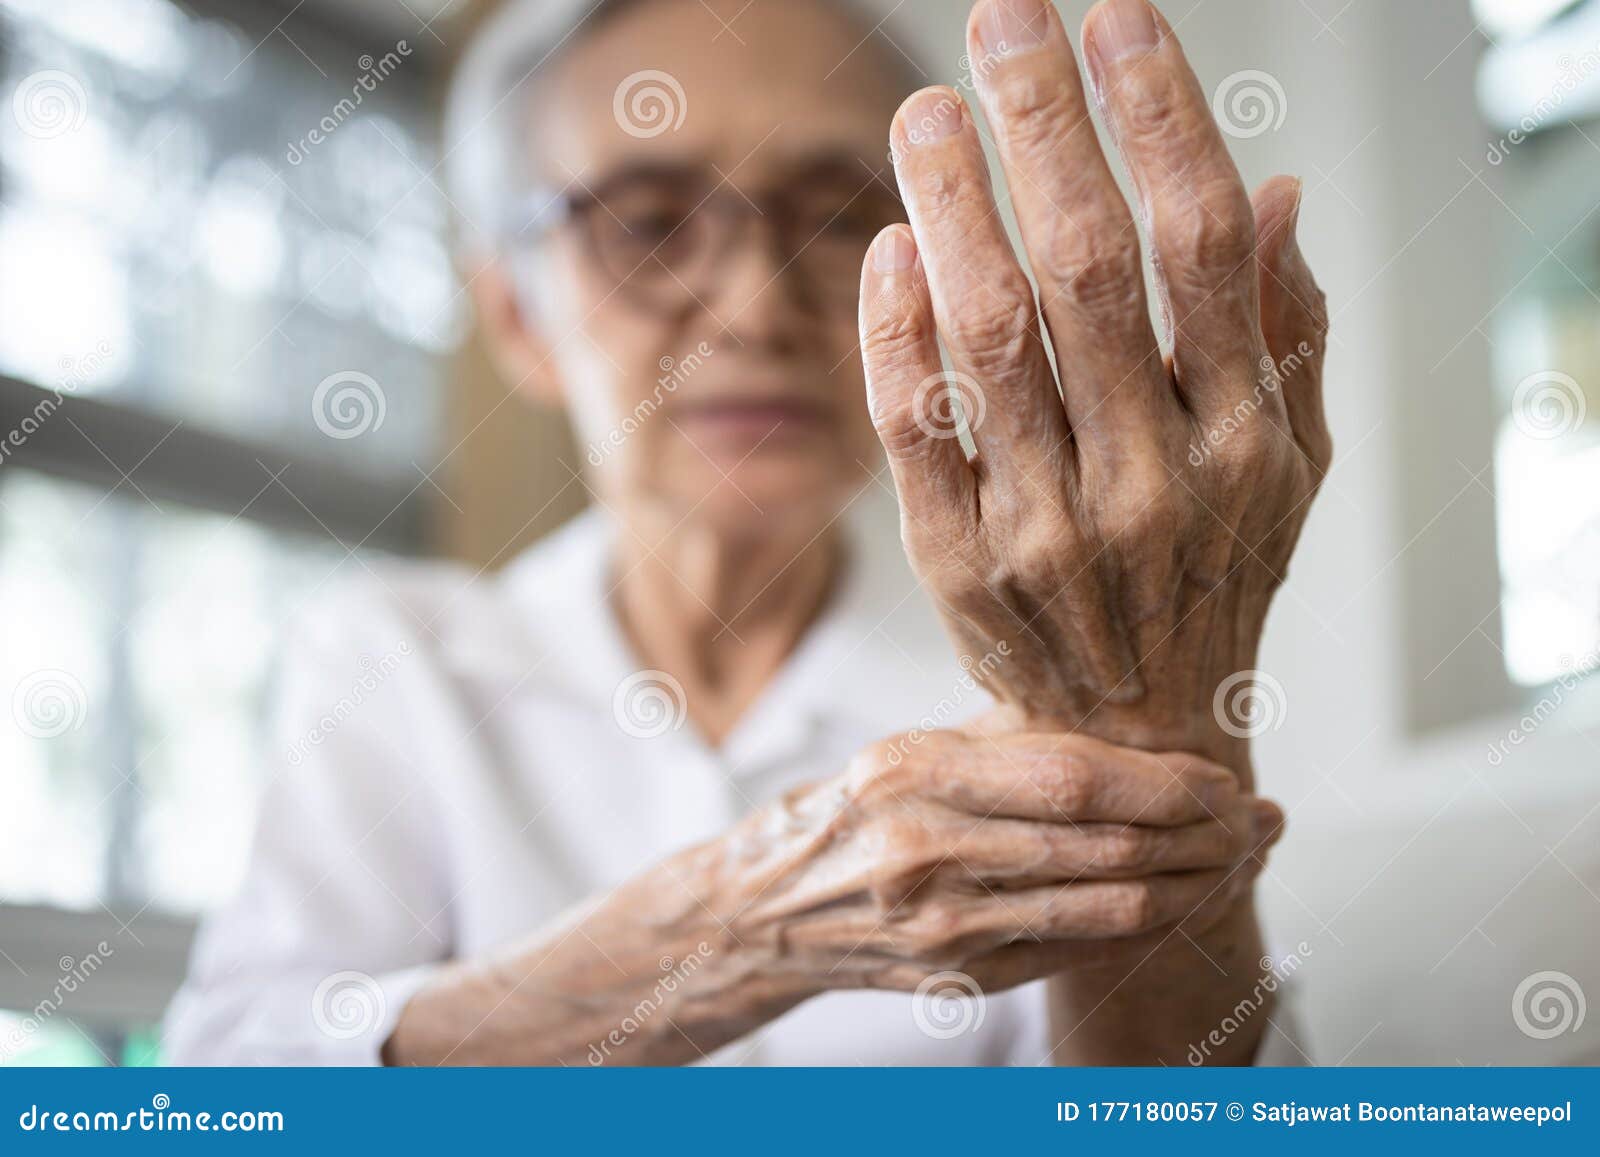 elderly female patient suffer from numbing pain in hand,numbness fingertip,arthritis inflammation,beriberi or peripheral